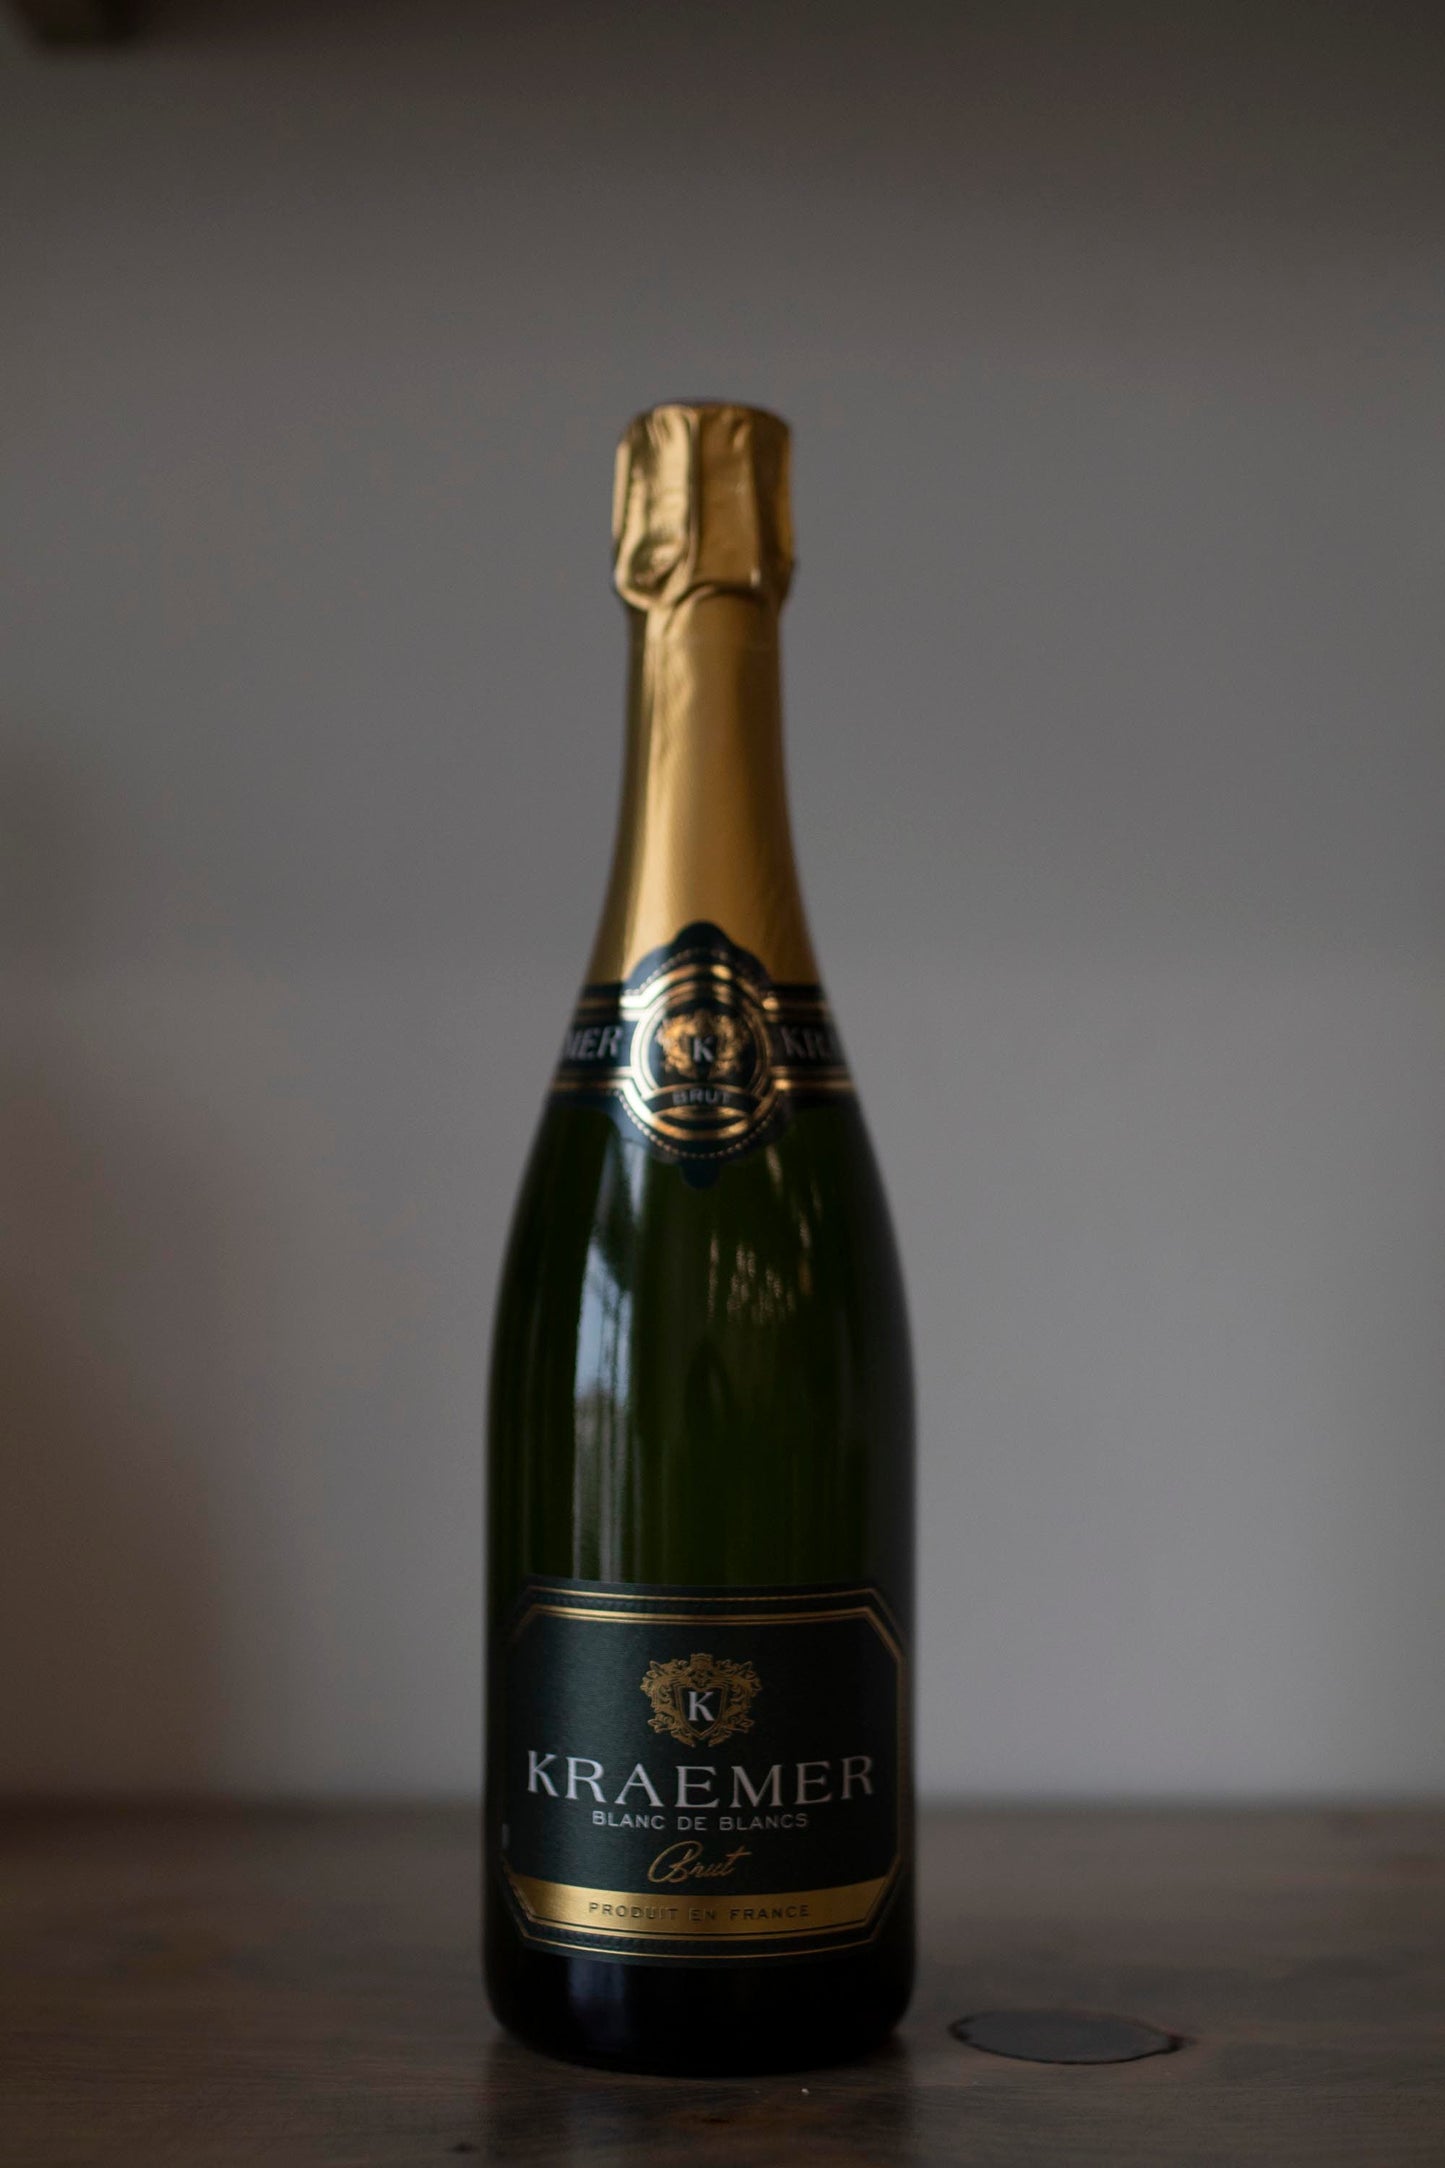 Bottle of Kramer blanc de blanc found at Vine & Board in 3809 NW 166th St Suite 1, Edmond, OK 73012